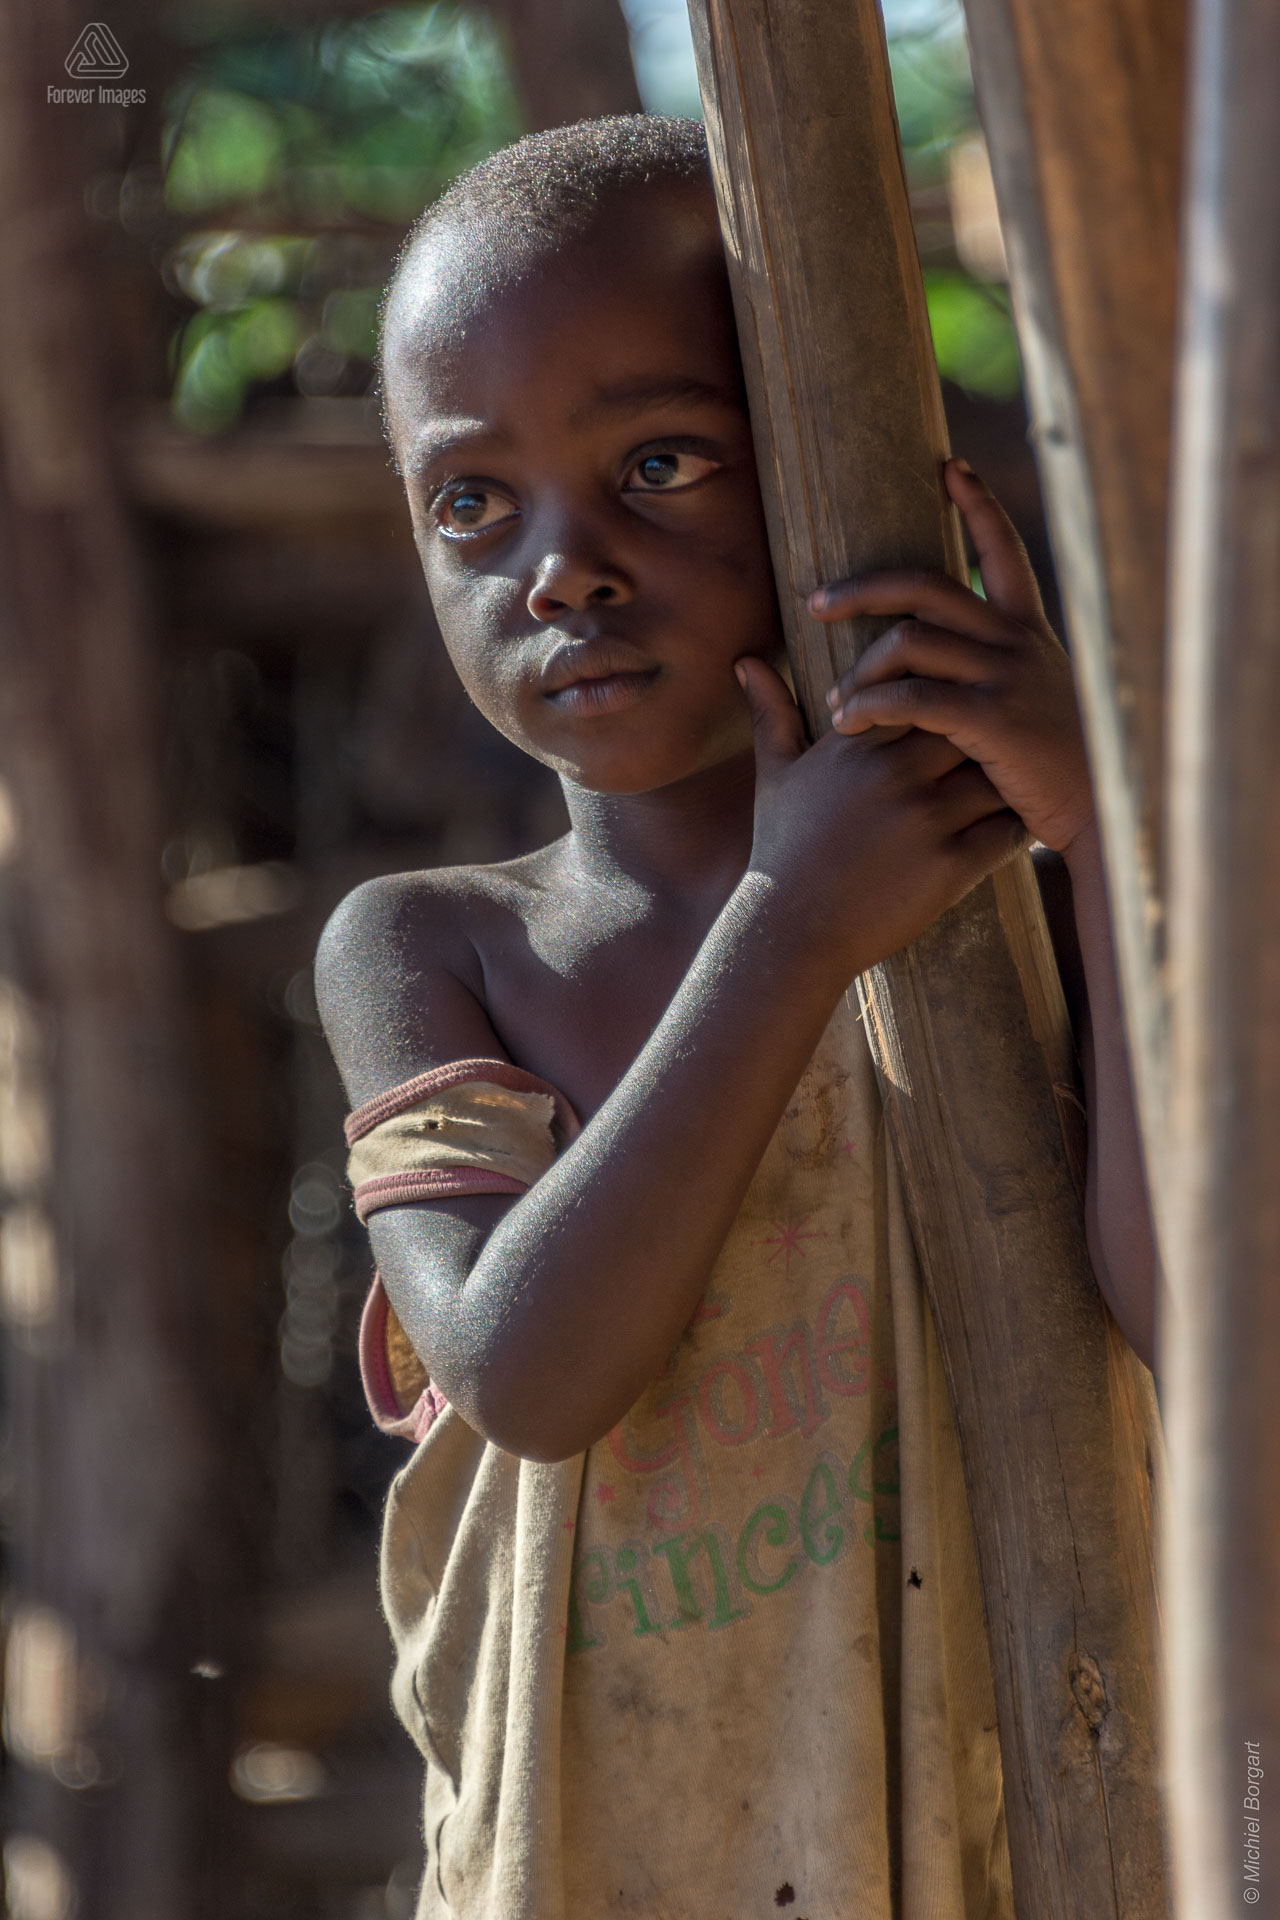 Portrait photo child holding fence Uganda during the Muskathlon of 2015 | Portrait Photographer Michiel Borgart - Forever Images.